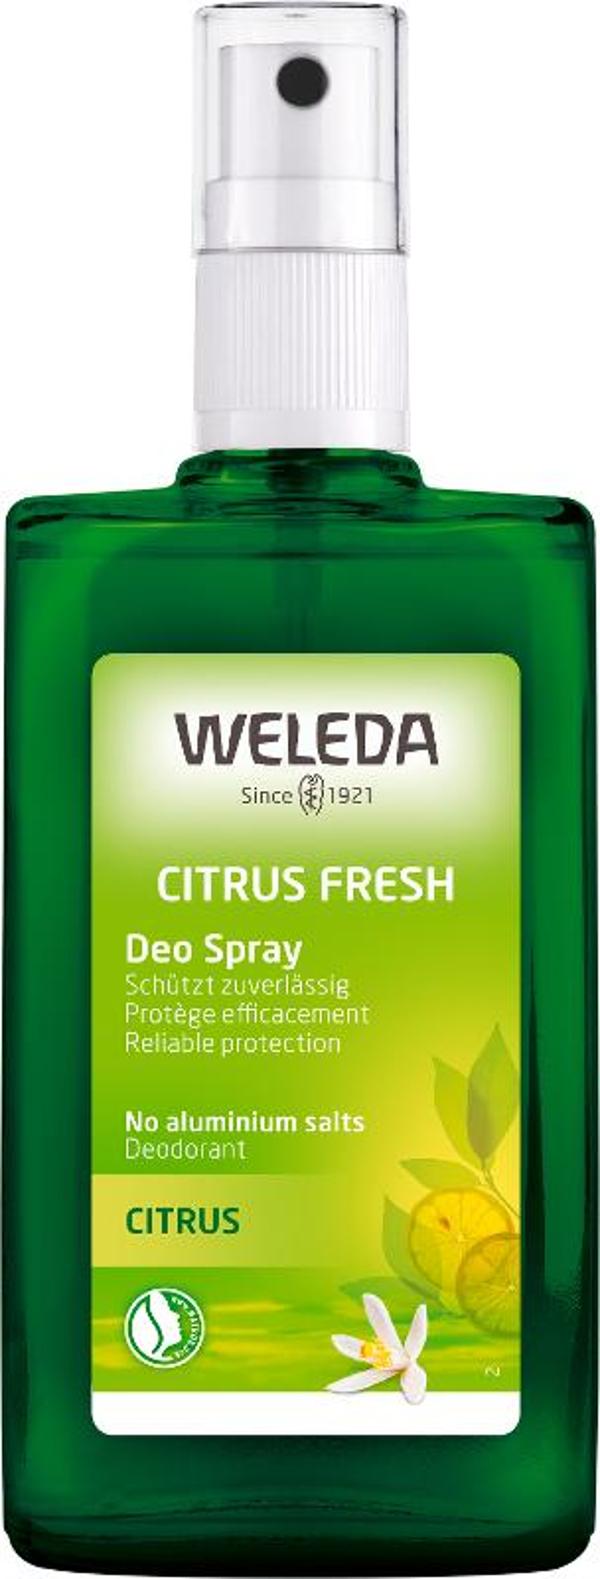 Produktfoto zu Citrus 24h Deo-Spray, 100 ml